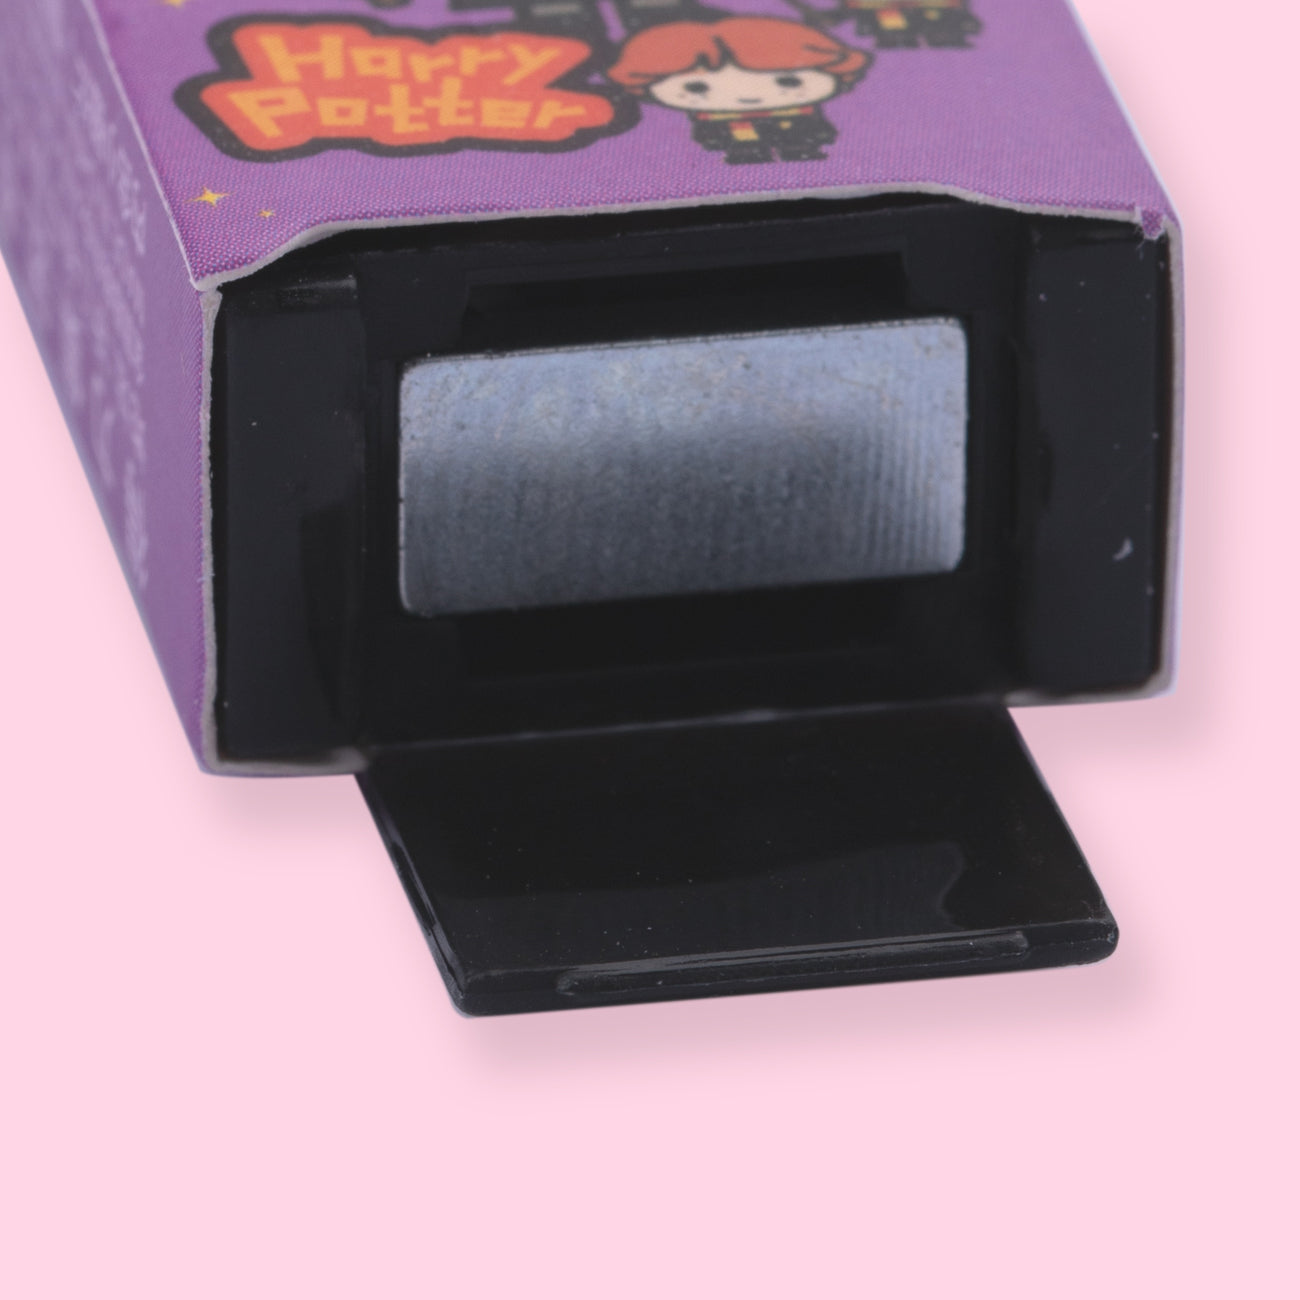 Harry Potter Limited Edition Eraser - Purple